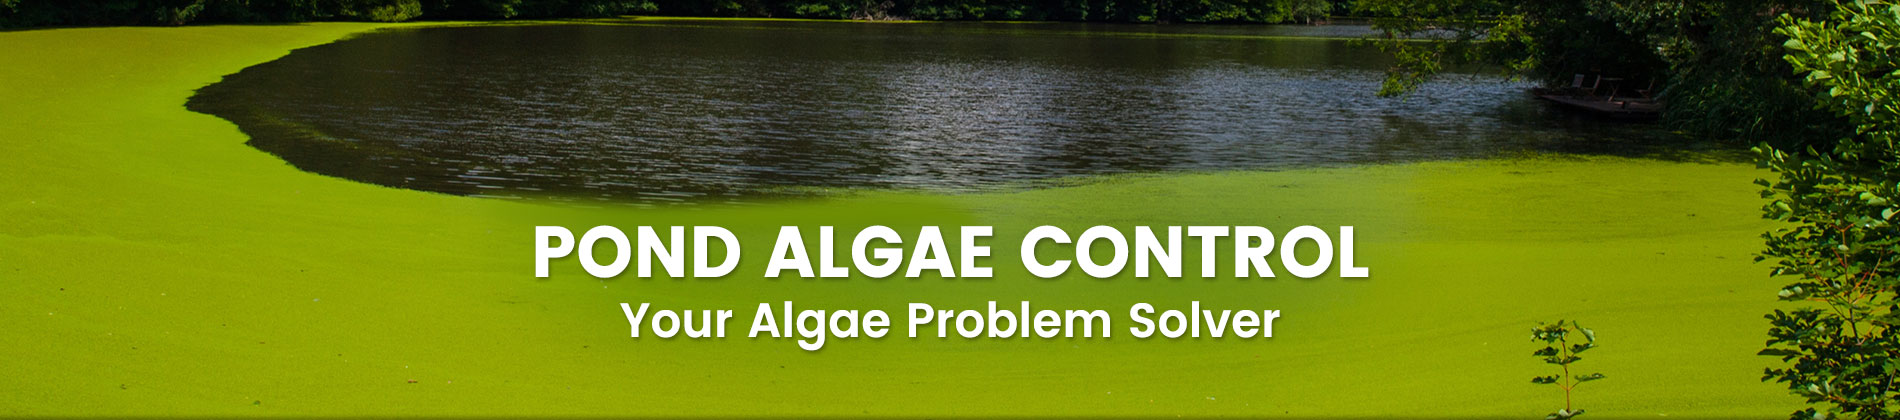 Pond Algae Control